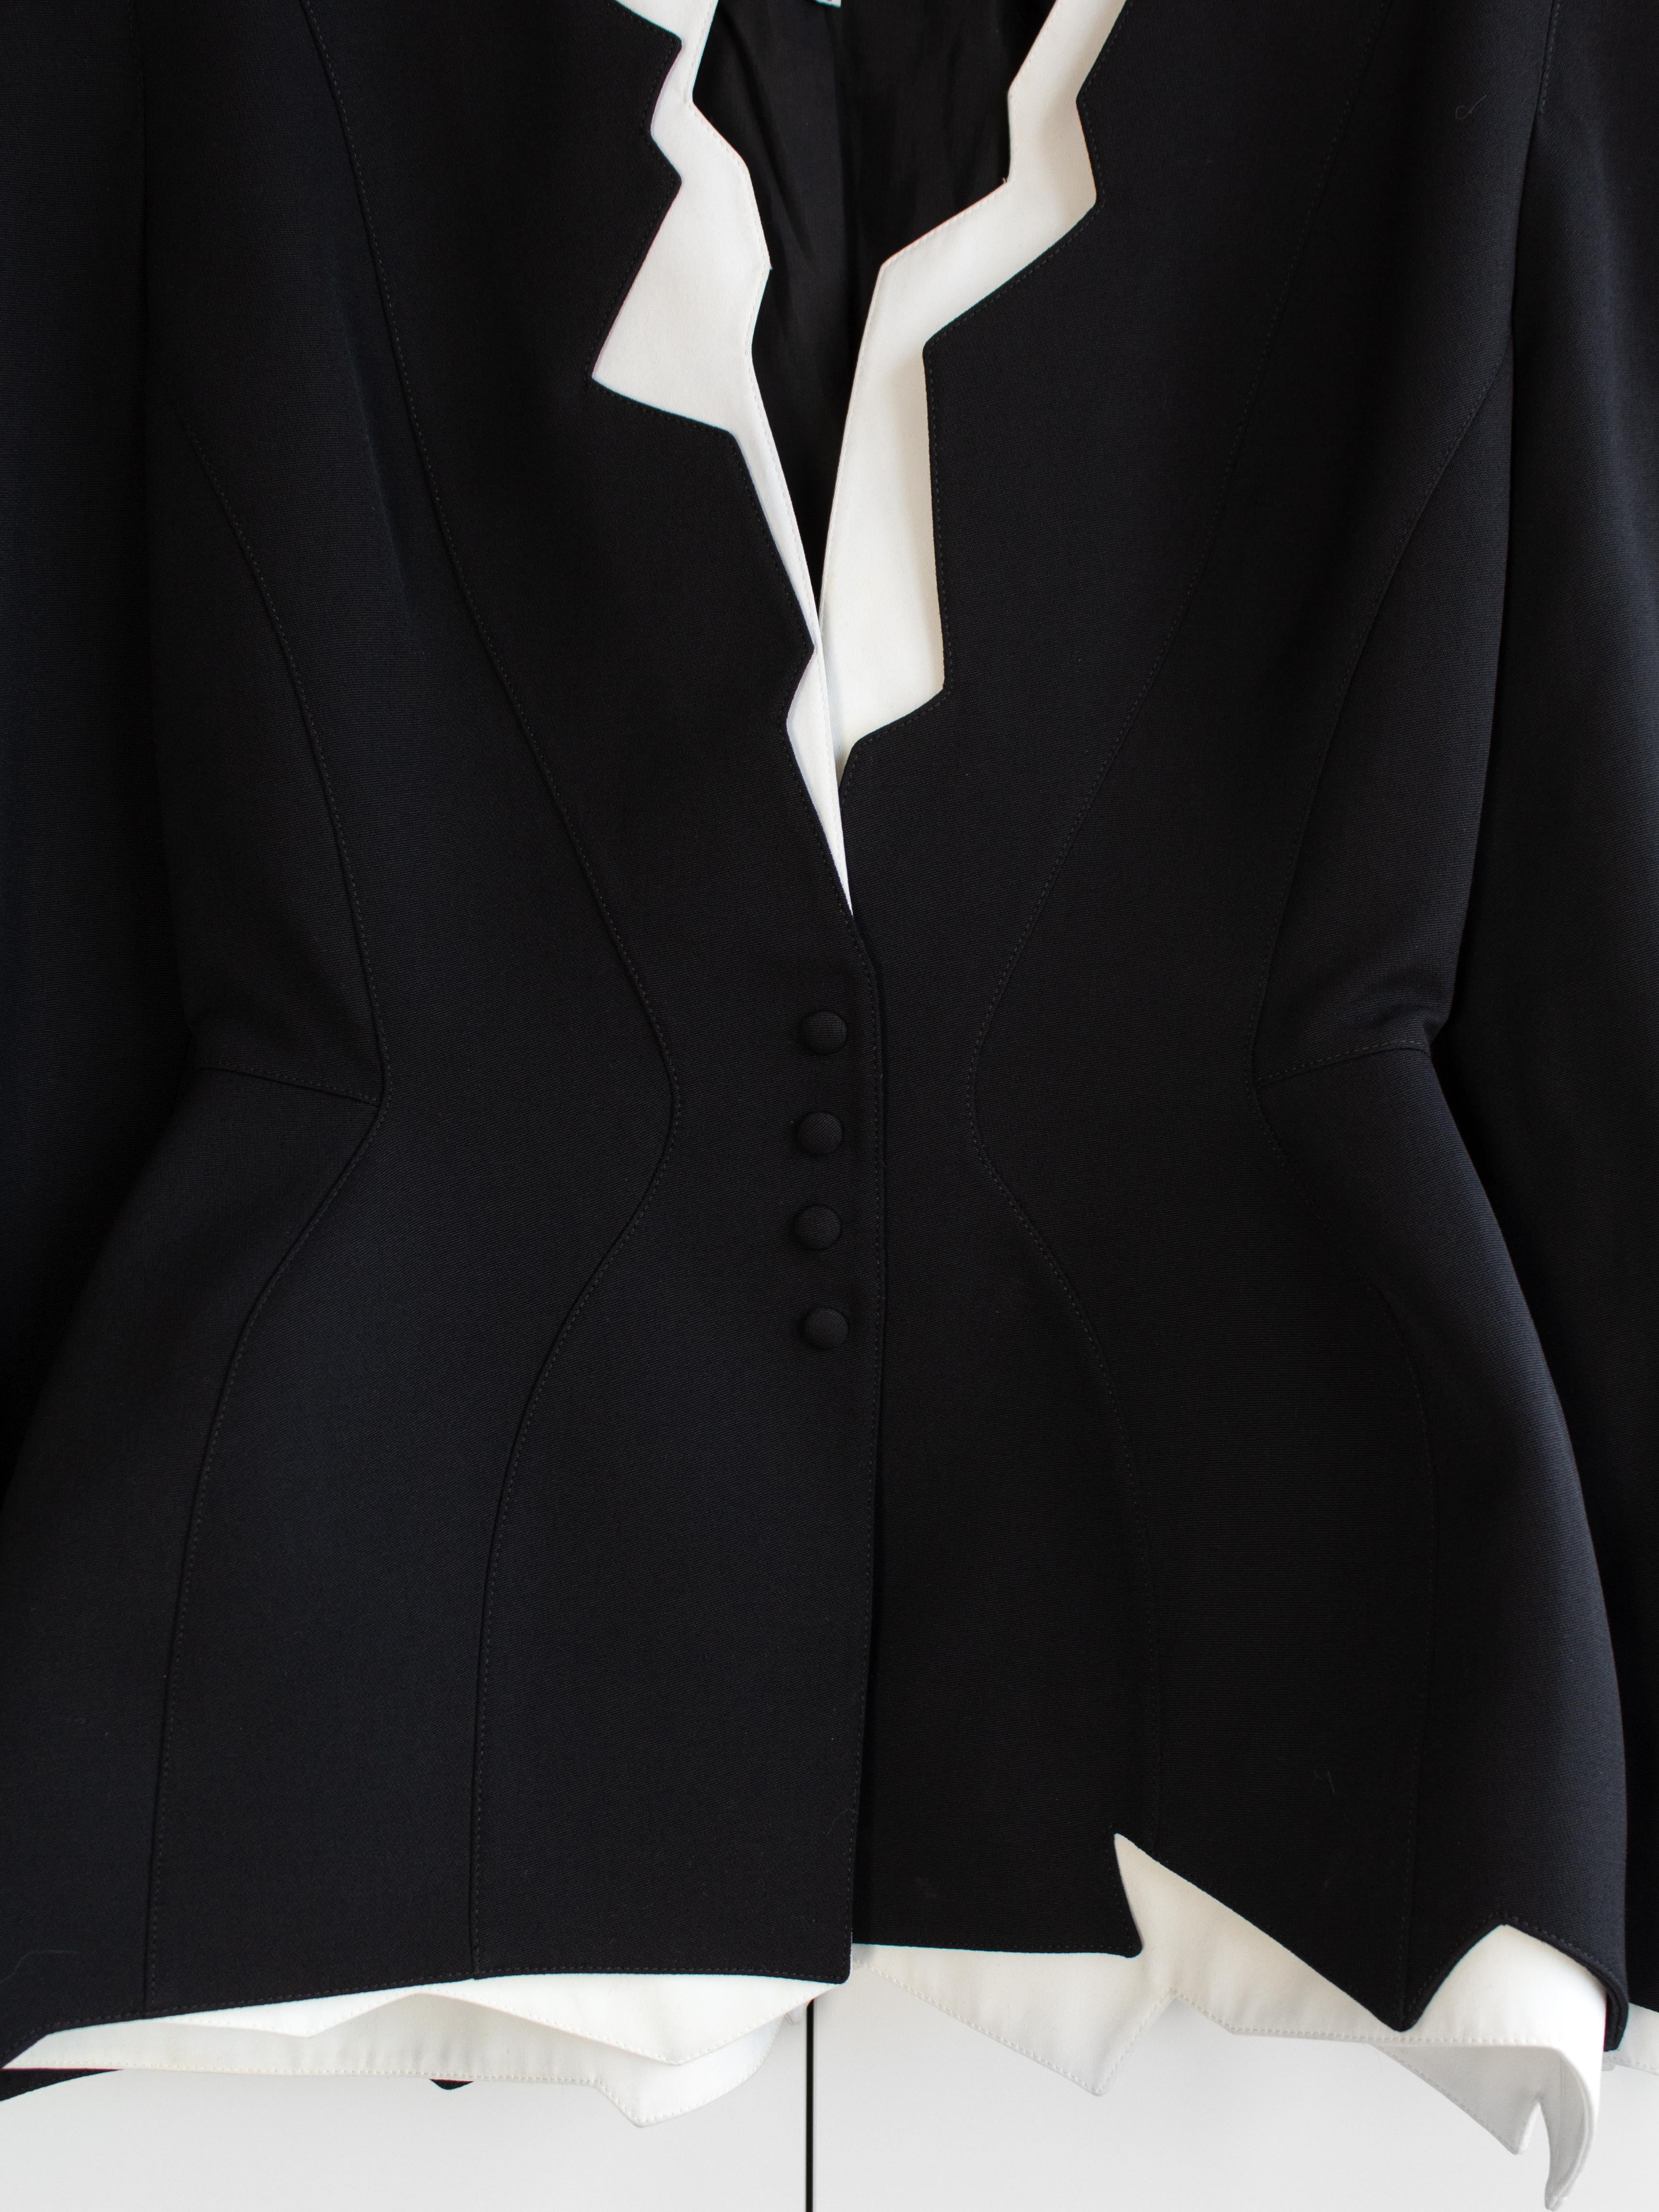 Icone Thierry Mugler Vintage S/S 1994 Black White Zigzag Sculptural Jacket en vente 6